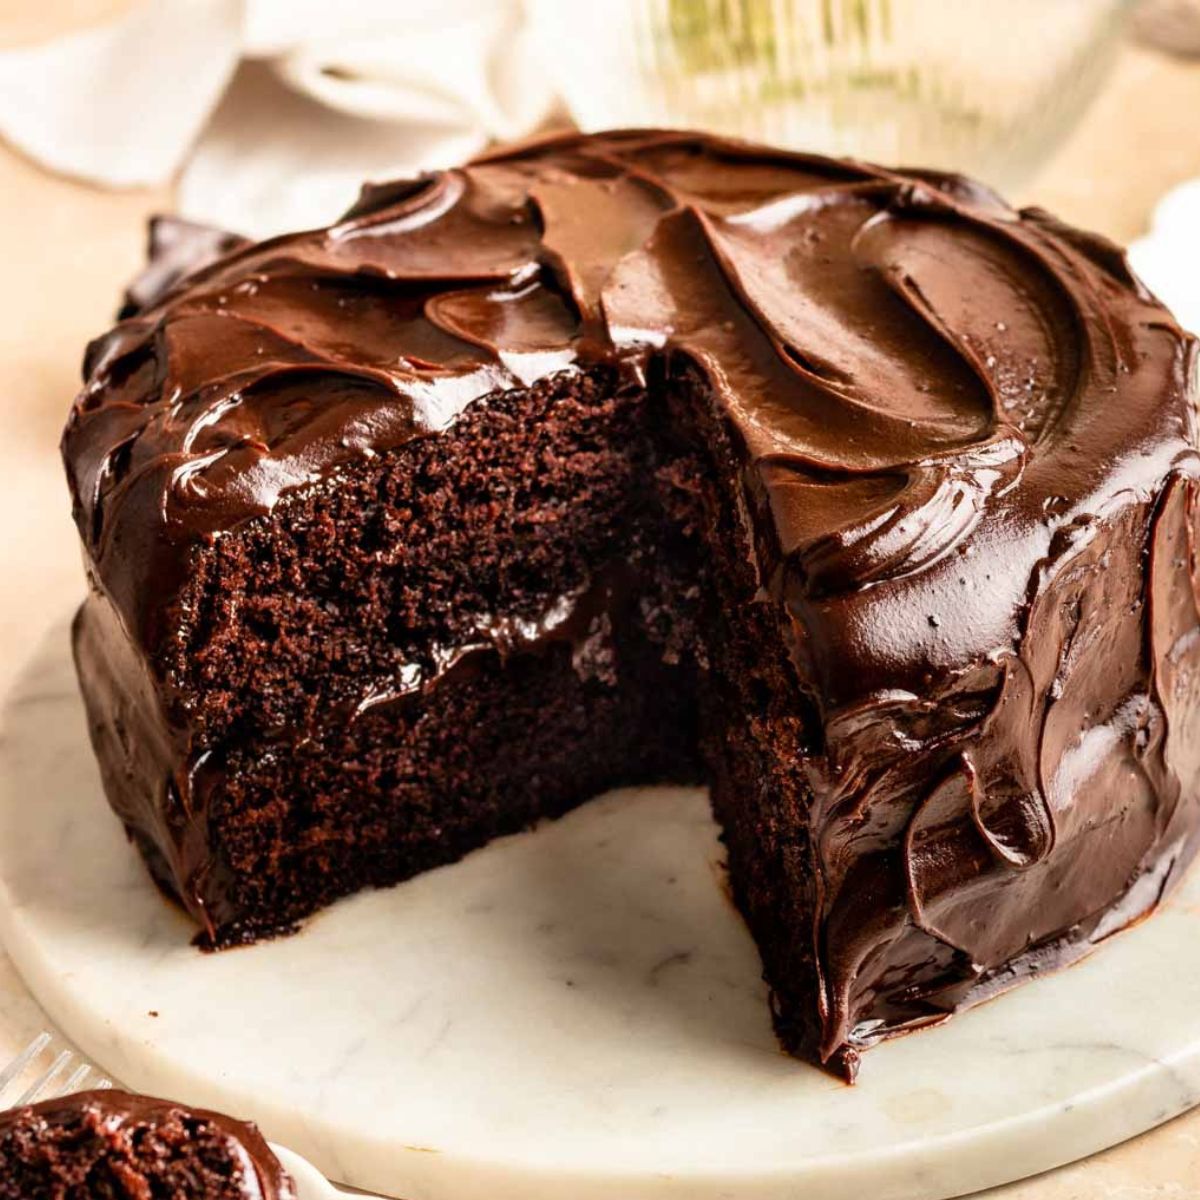 Chocolate Glaze Recipe for Cakes and Desserts